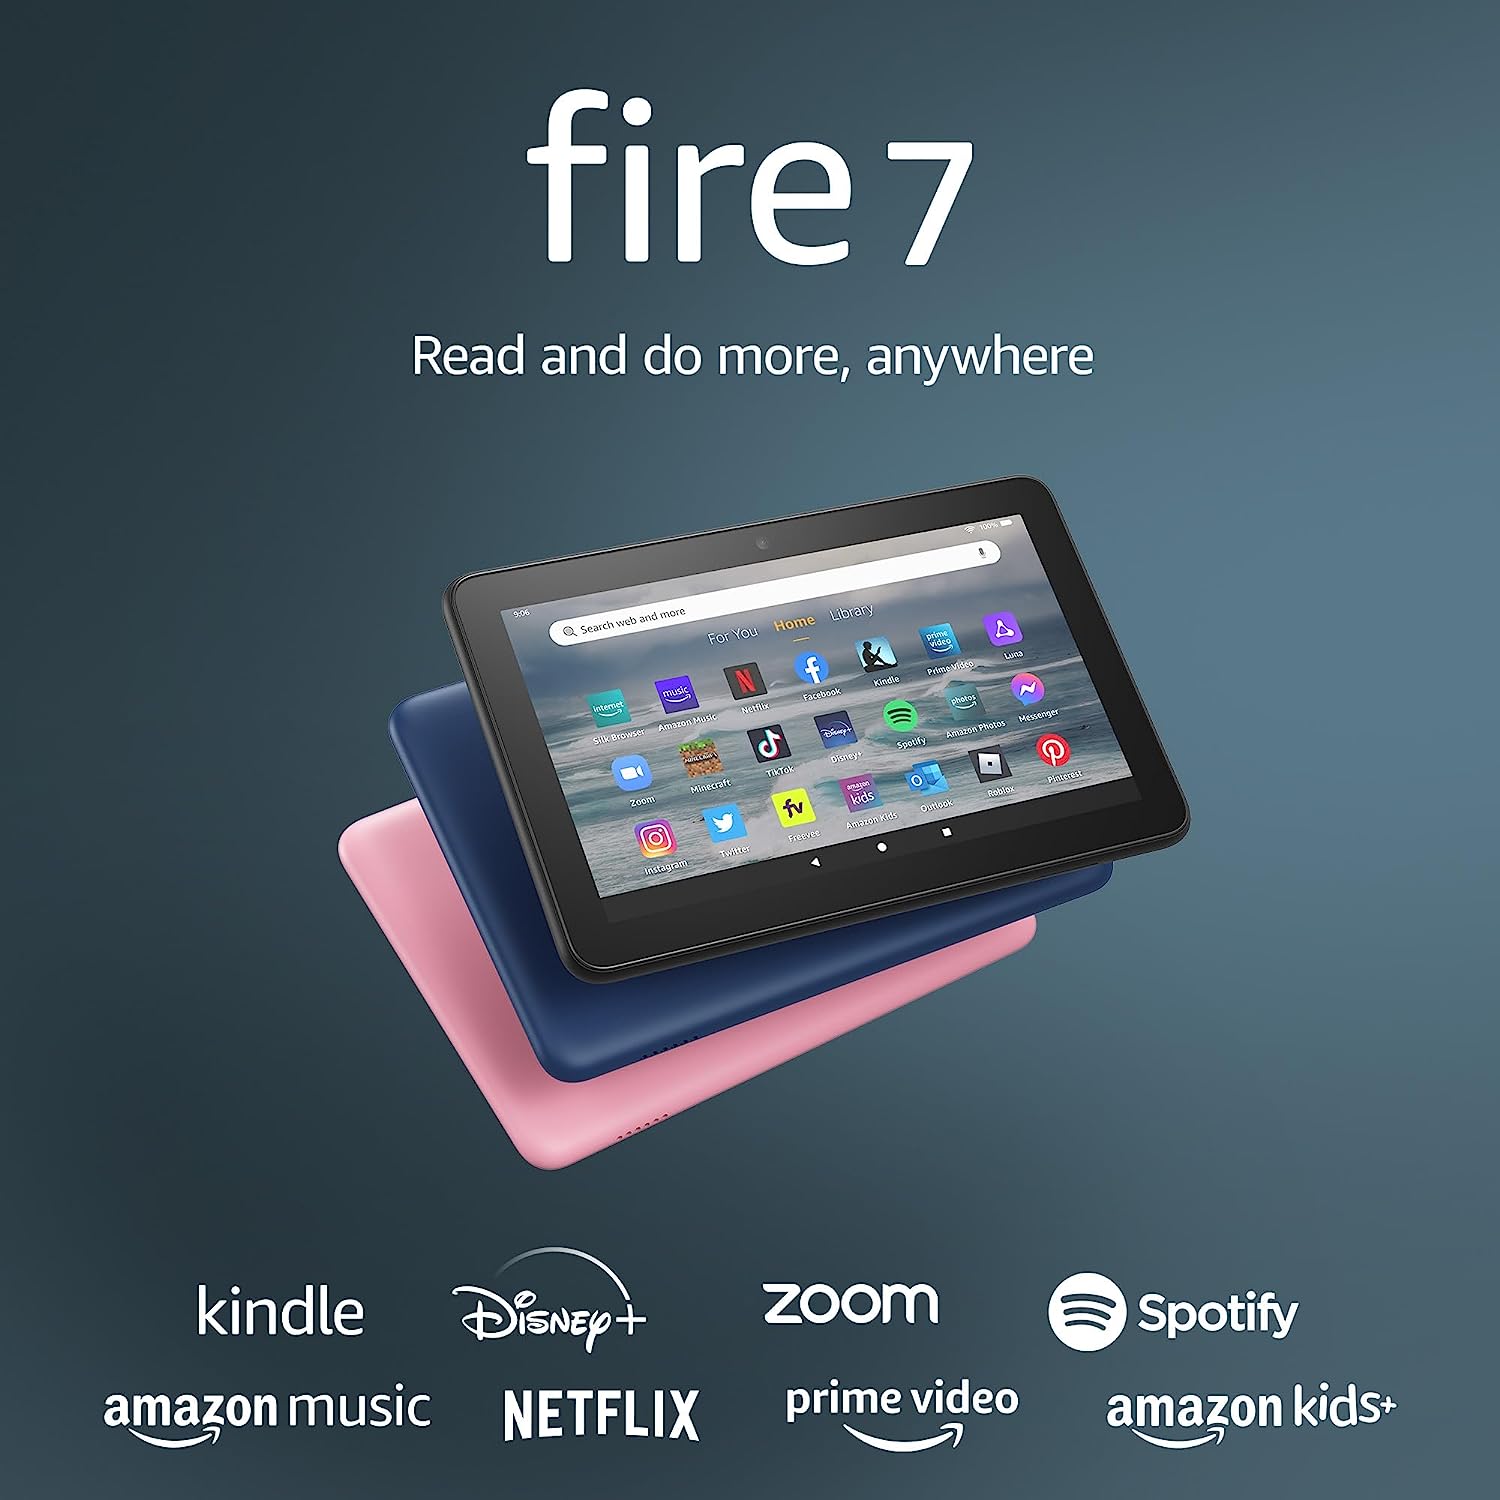 Amazon Fire 7 tablet, 7” display, quad-core processor, [...]